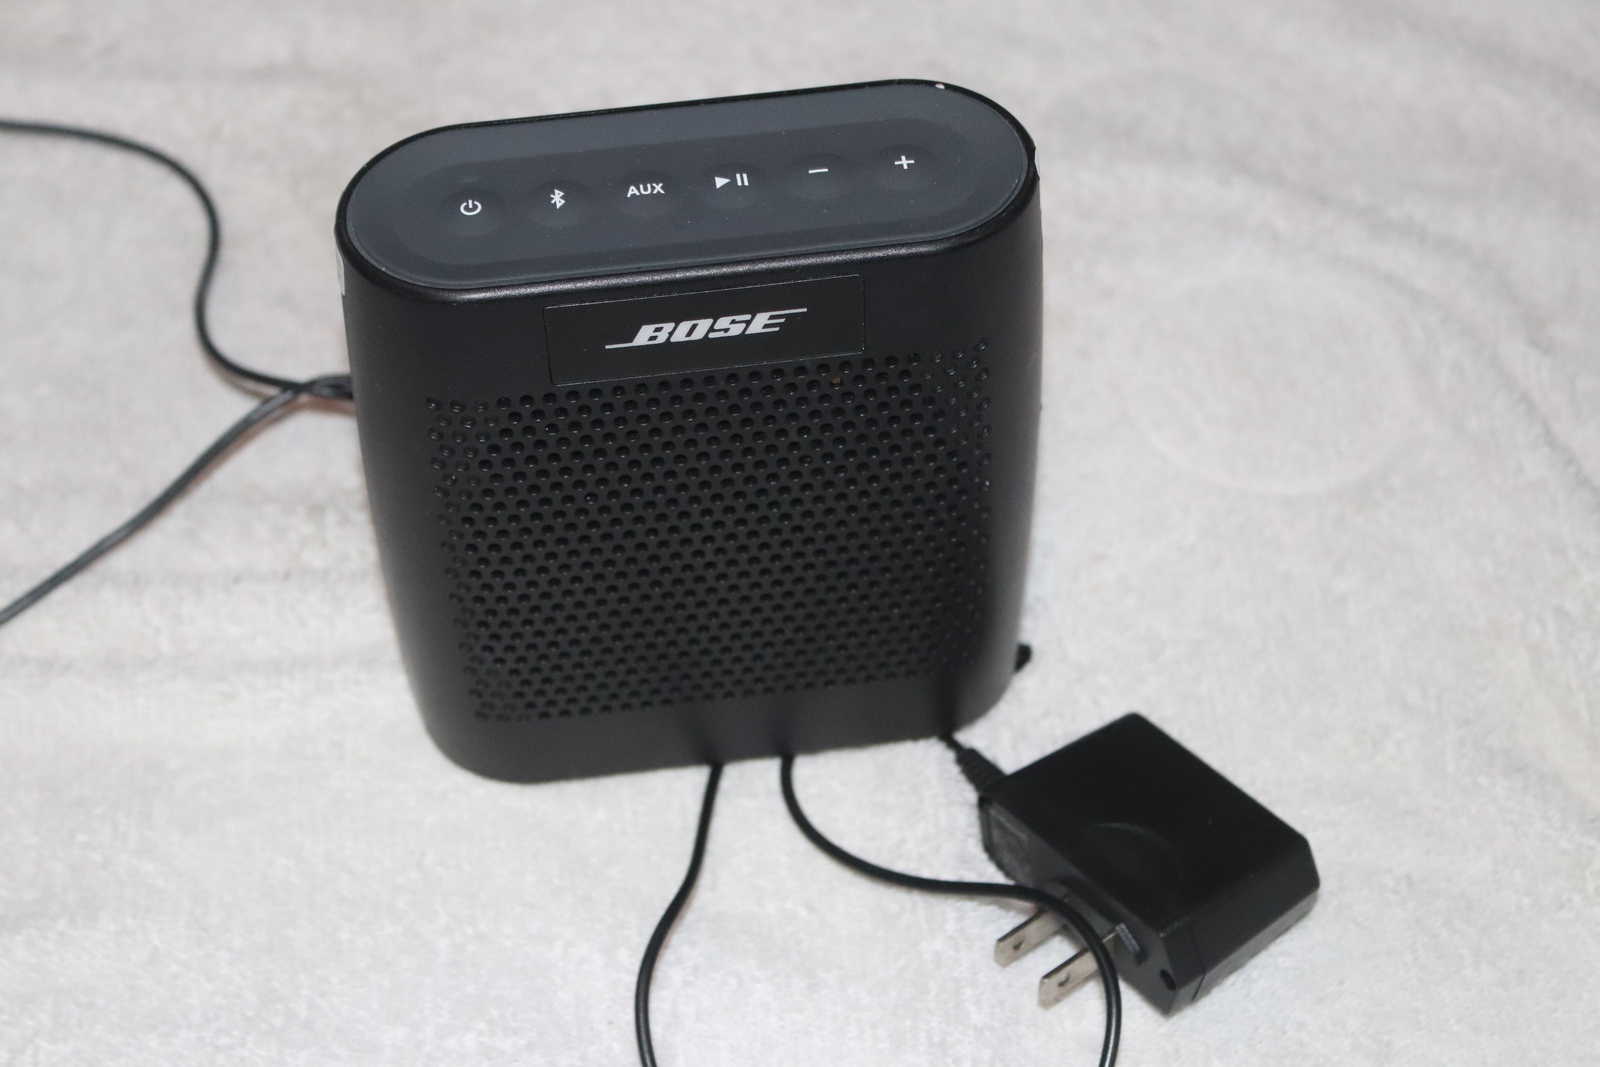 Bose SoundLink Portable Bluetooth Sound Speaker Black 415859 CLEAN USED Tested - $55.00